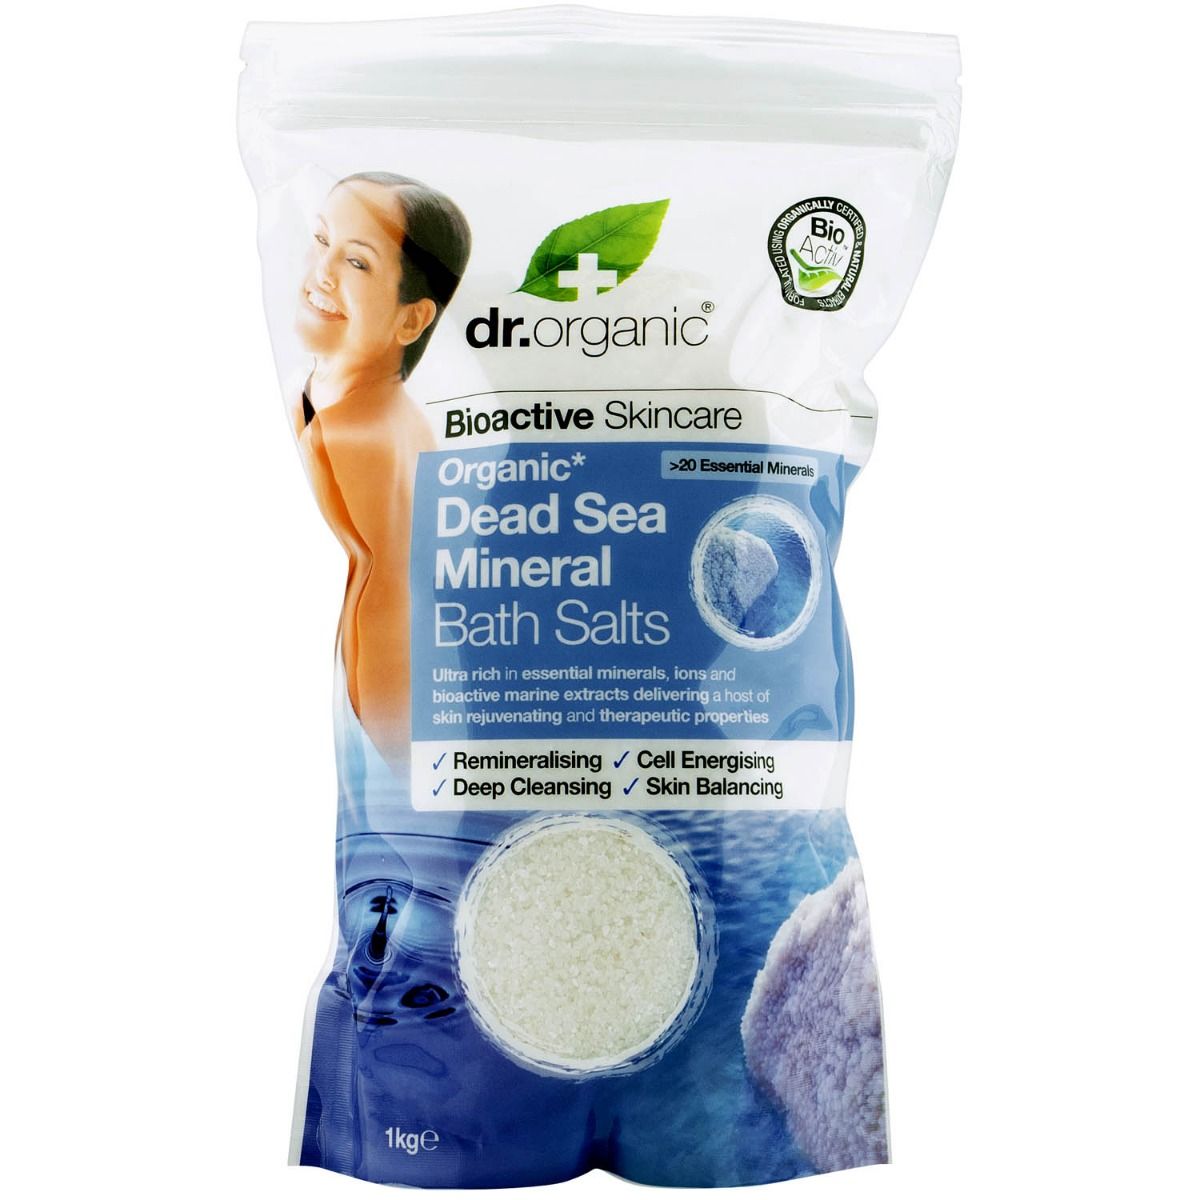 Buy dr.organic Dead Sea Mineral Bath Salt, 1 kg Online